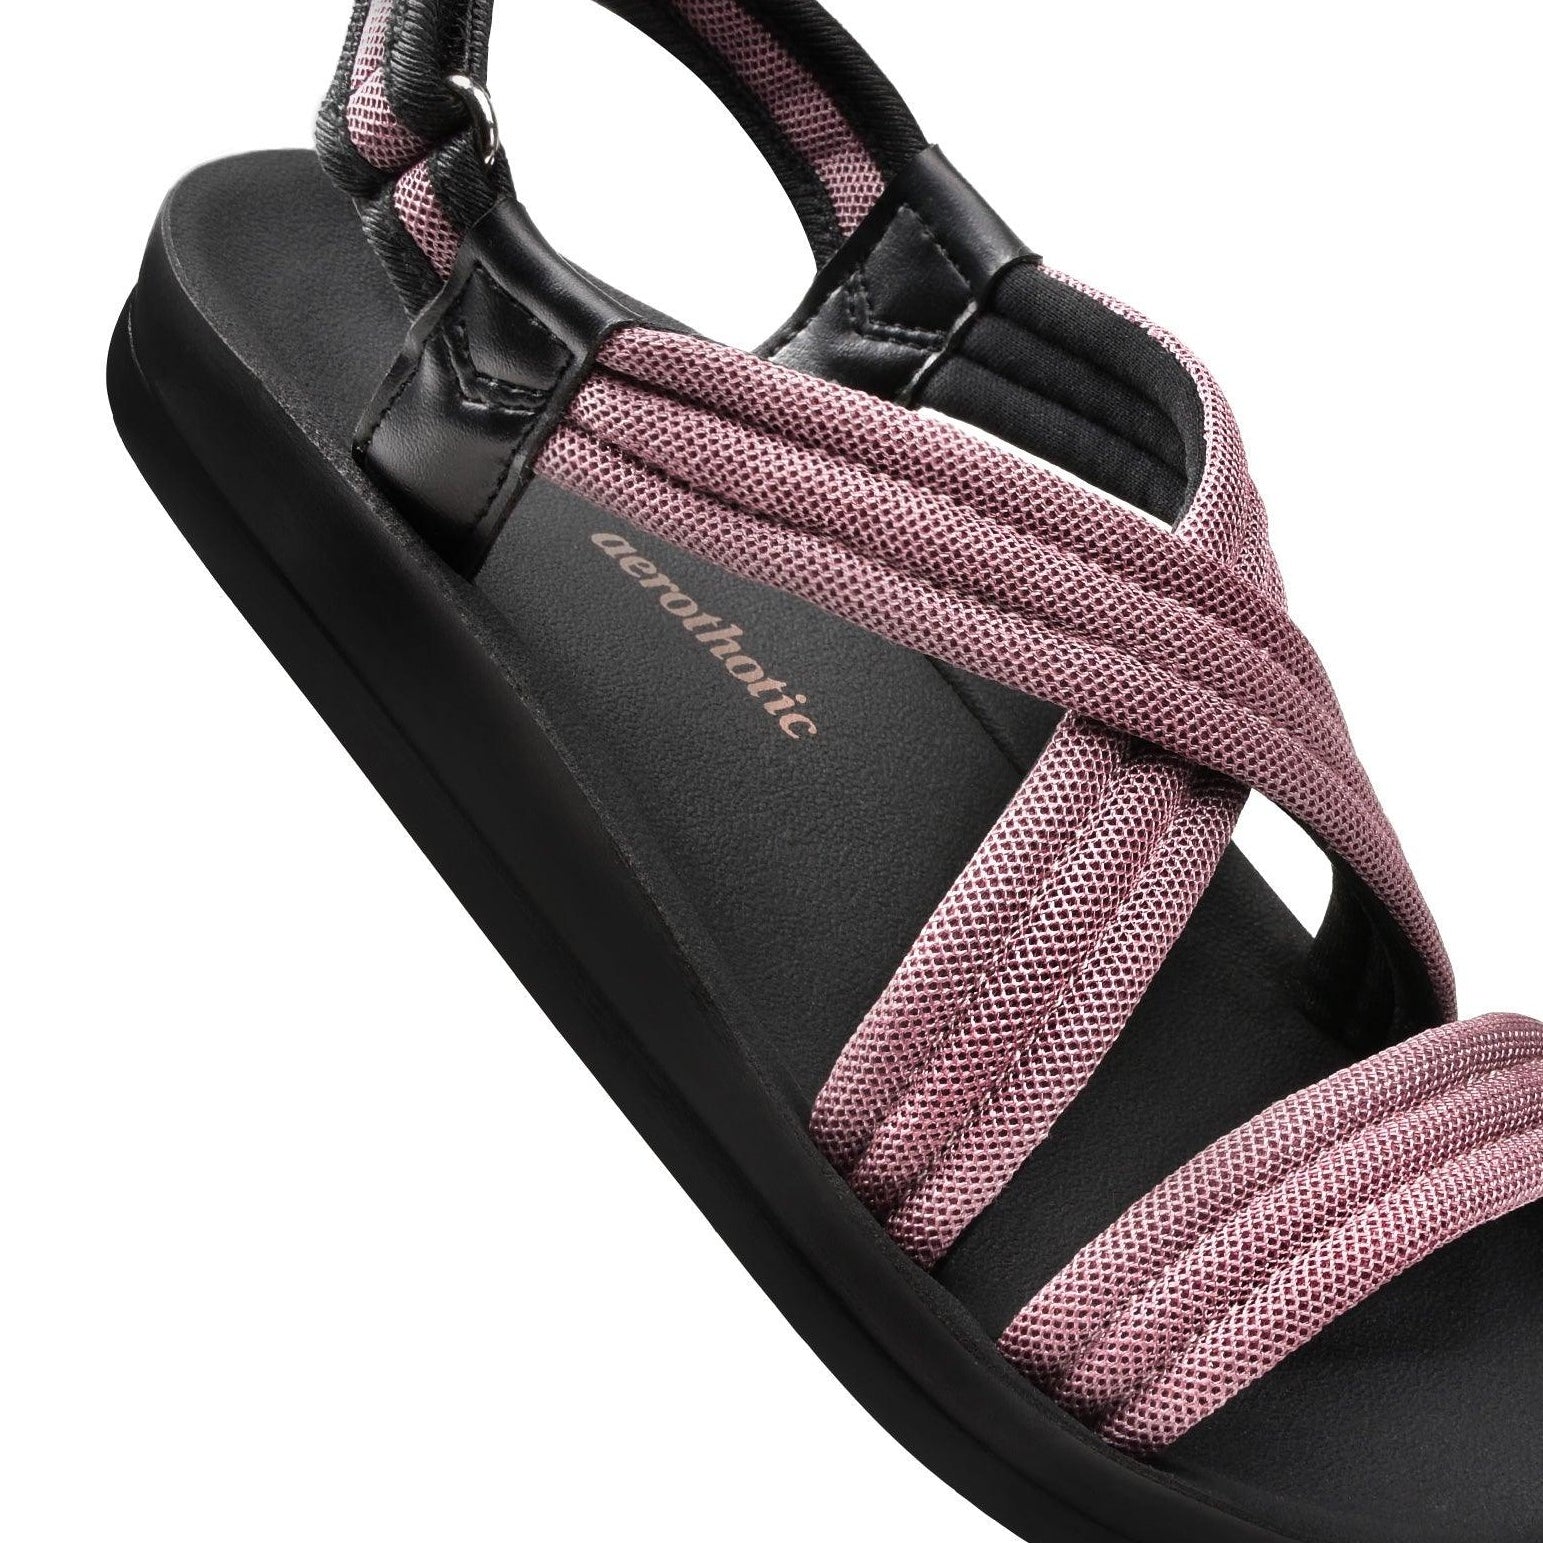 Women's Shoes - Sandals Womens Velcro Ankle Strap Slip On Sandals 5 Color Options